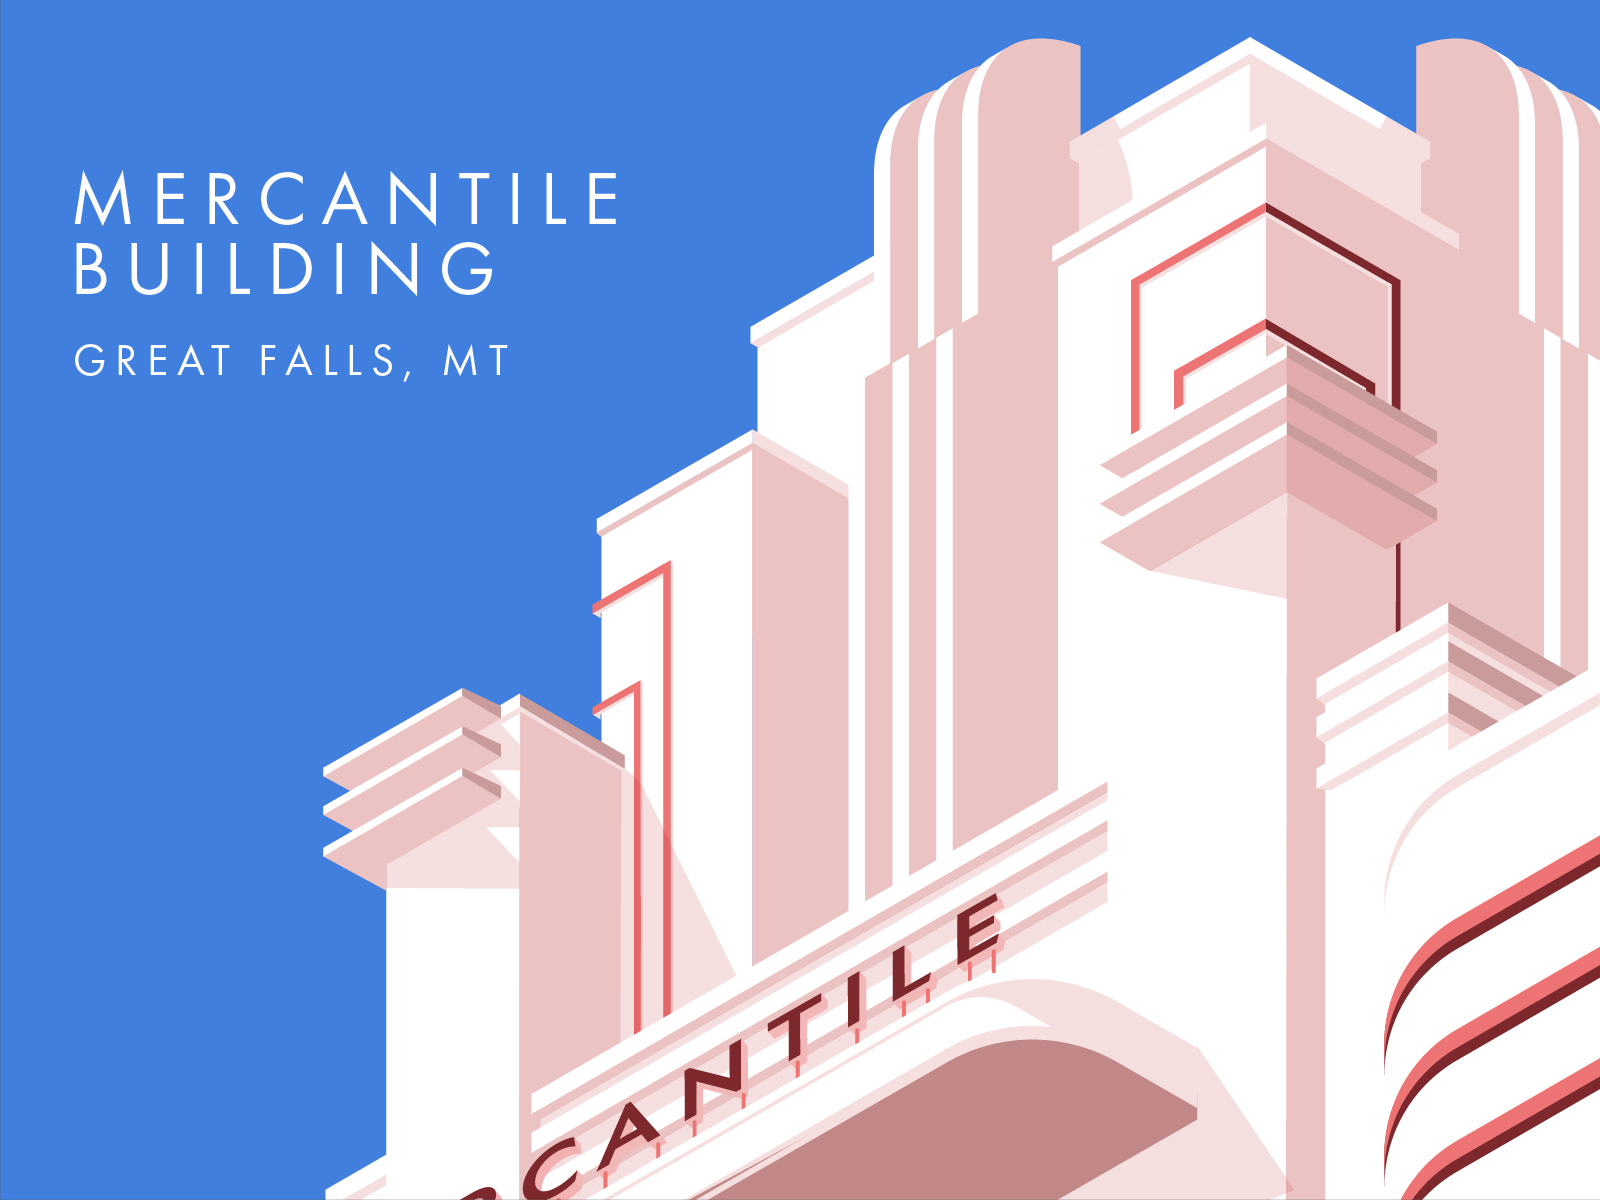 Mercantile Building - Great Falls, MT architecture art deco great falls illustration isometric mercantile